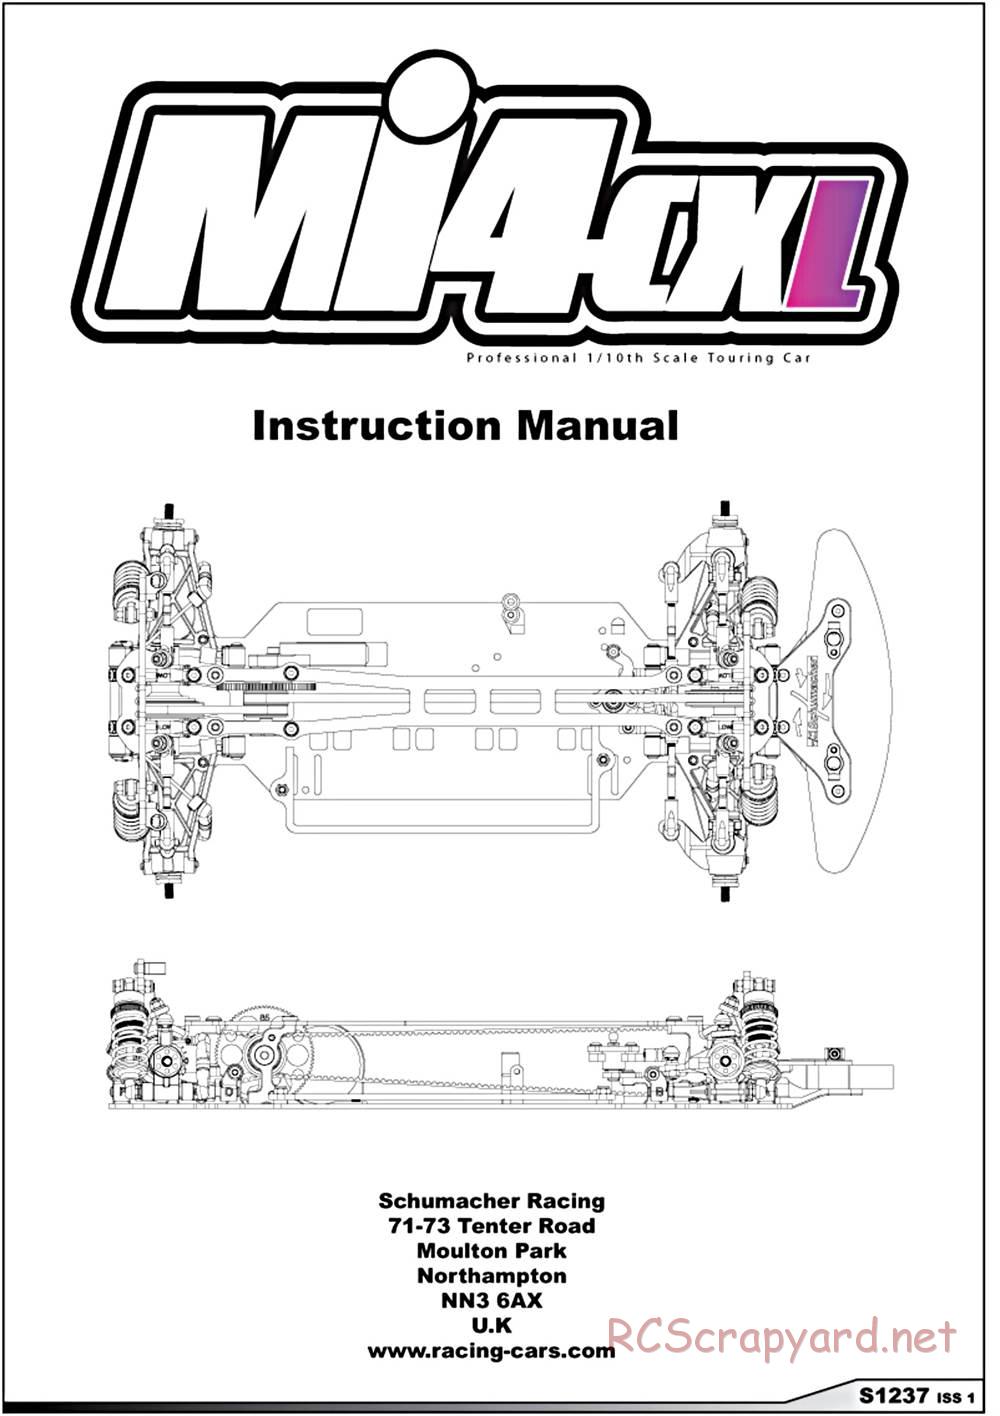 Schumacher - Mi4CXL - Manual - Page 1